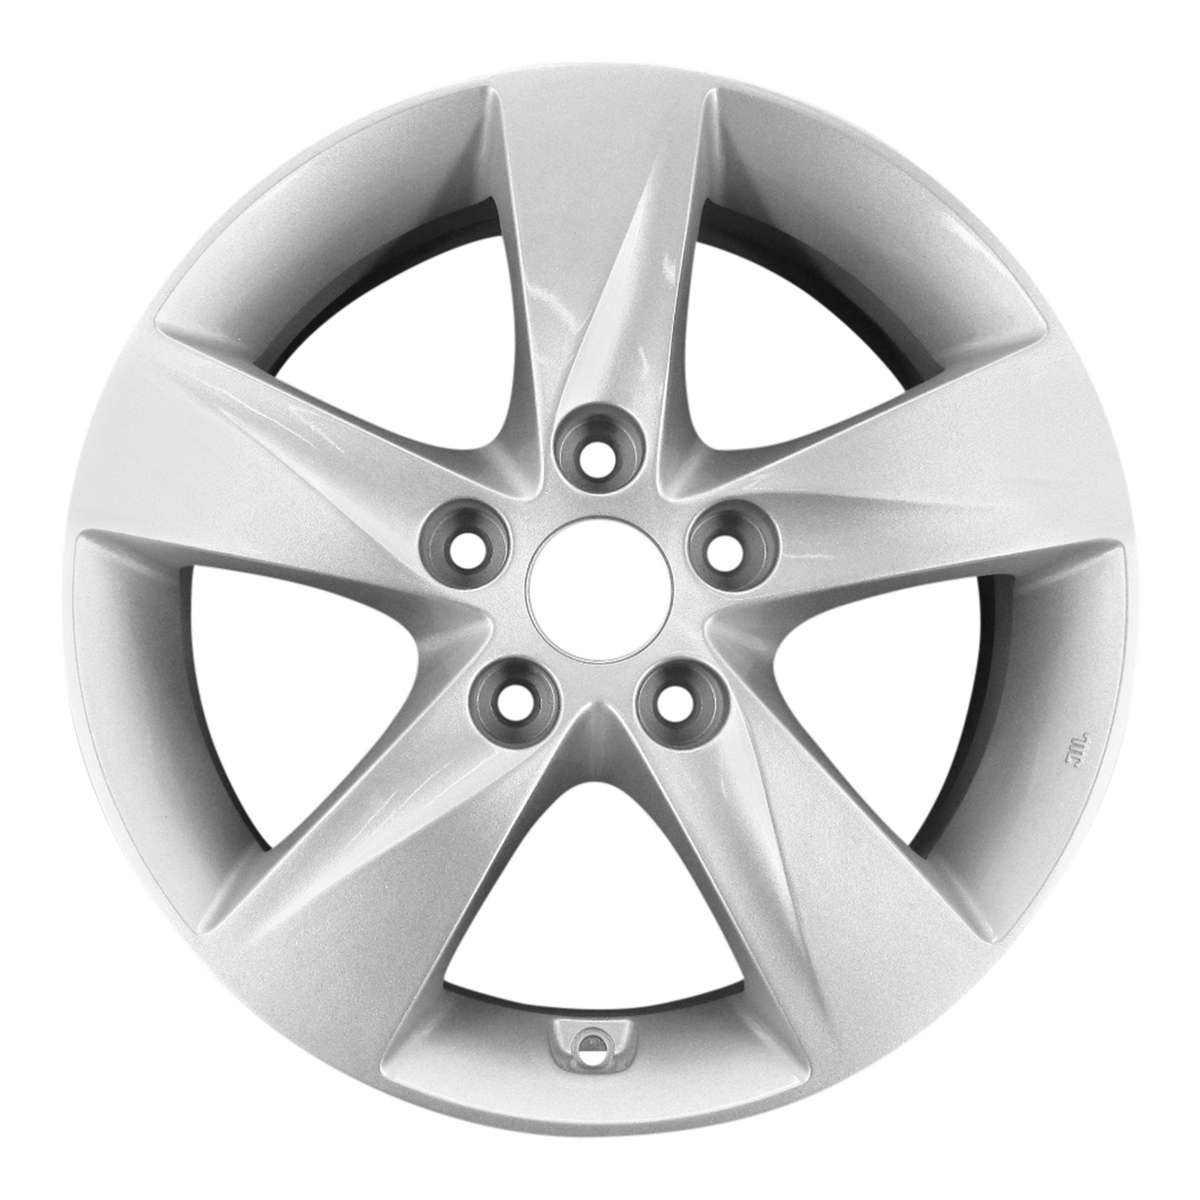 2013 Hyundai Elantra New 16" Replacement Wheel Rim RW70806S